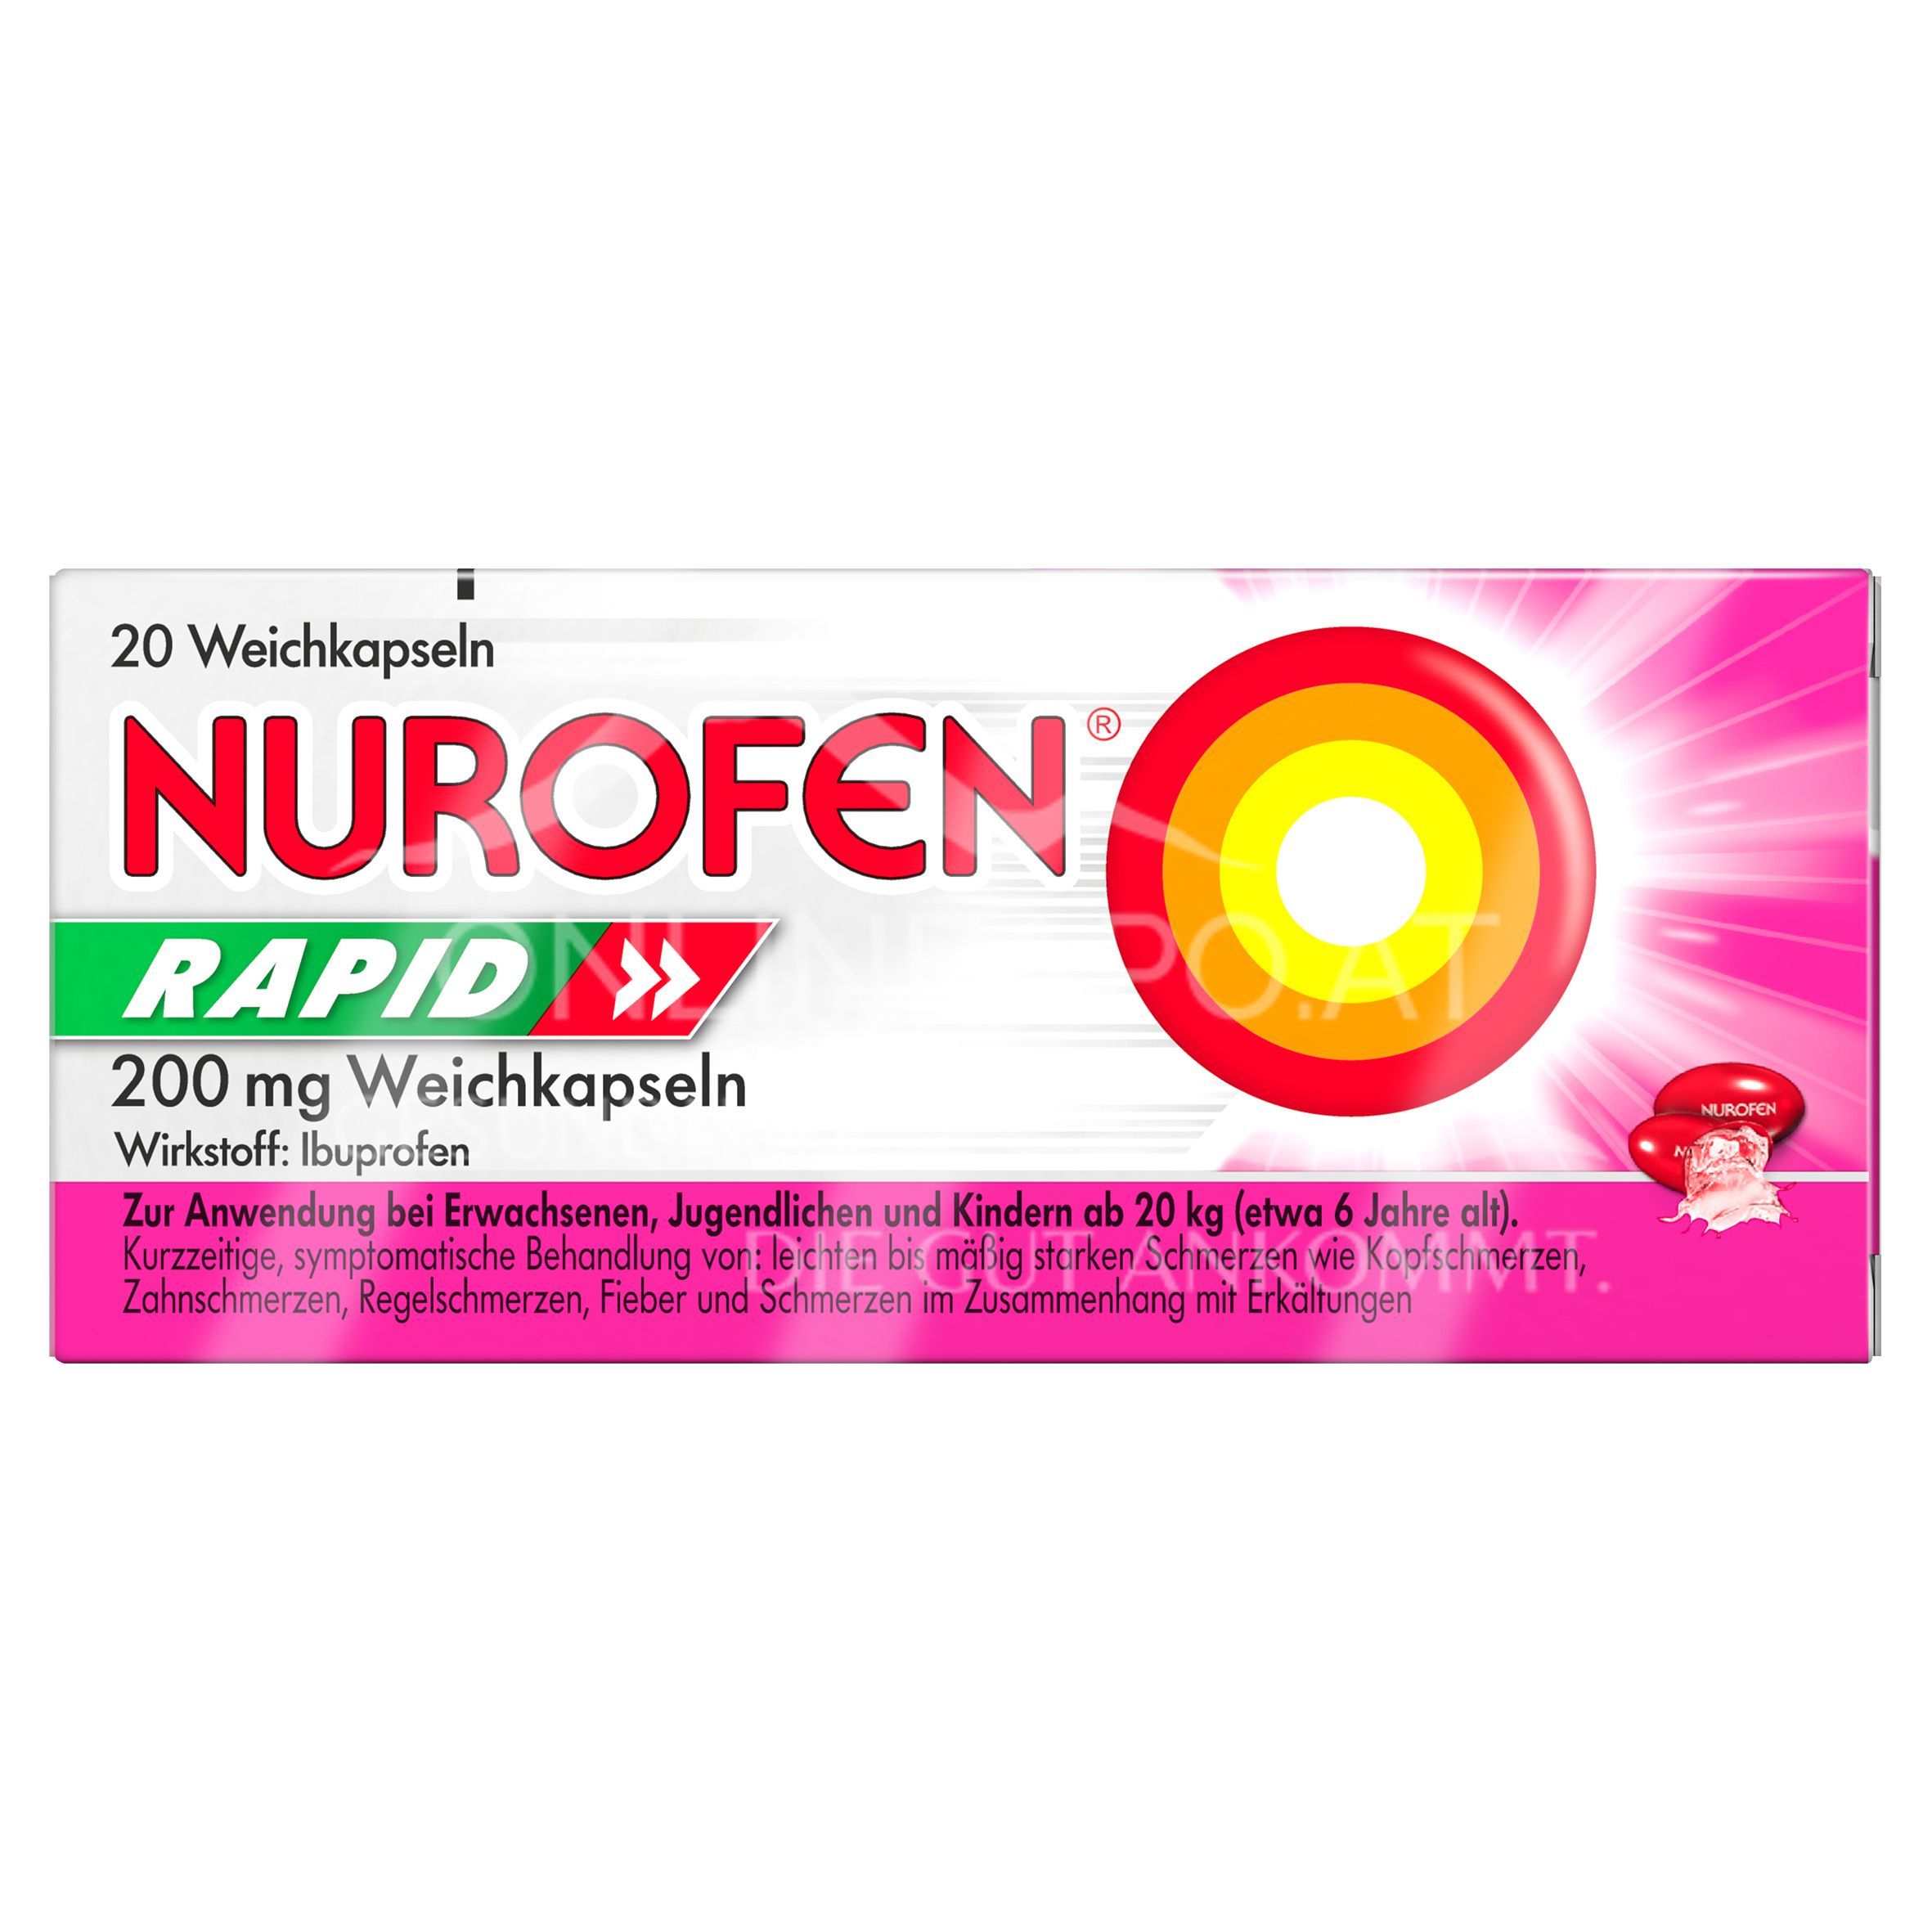 Nurofen® Rapid 200 mg Weichkapseln